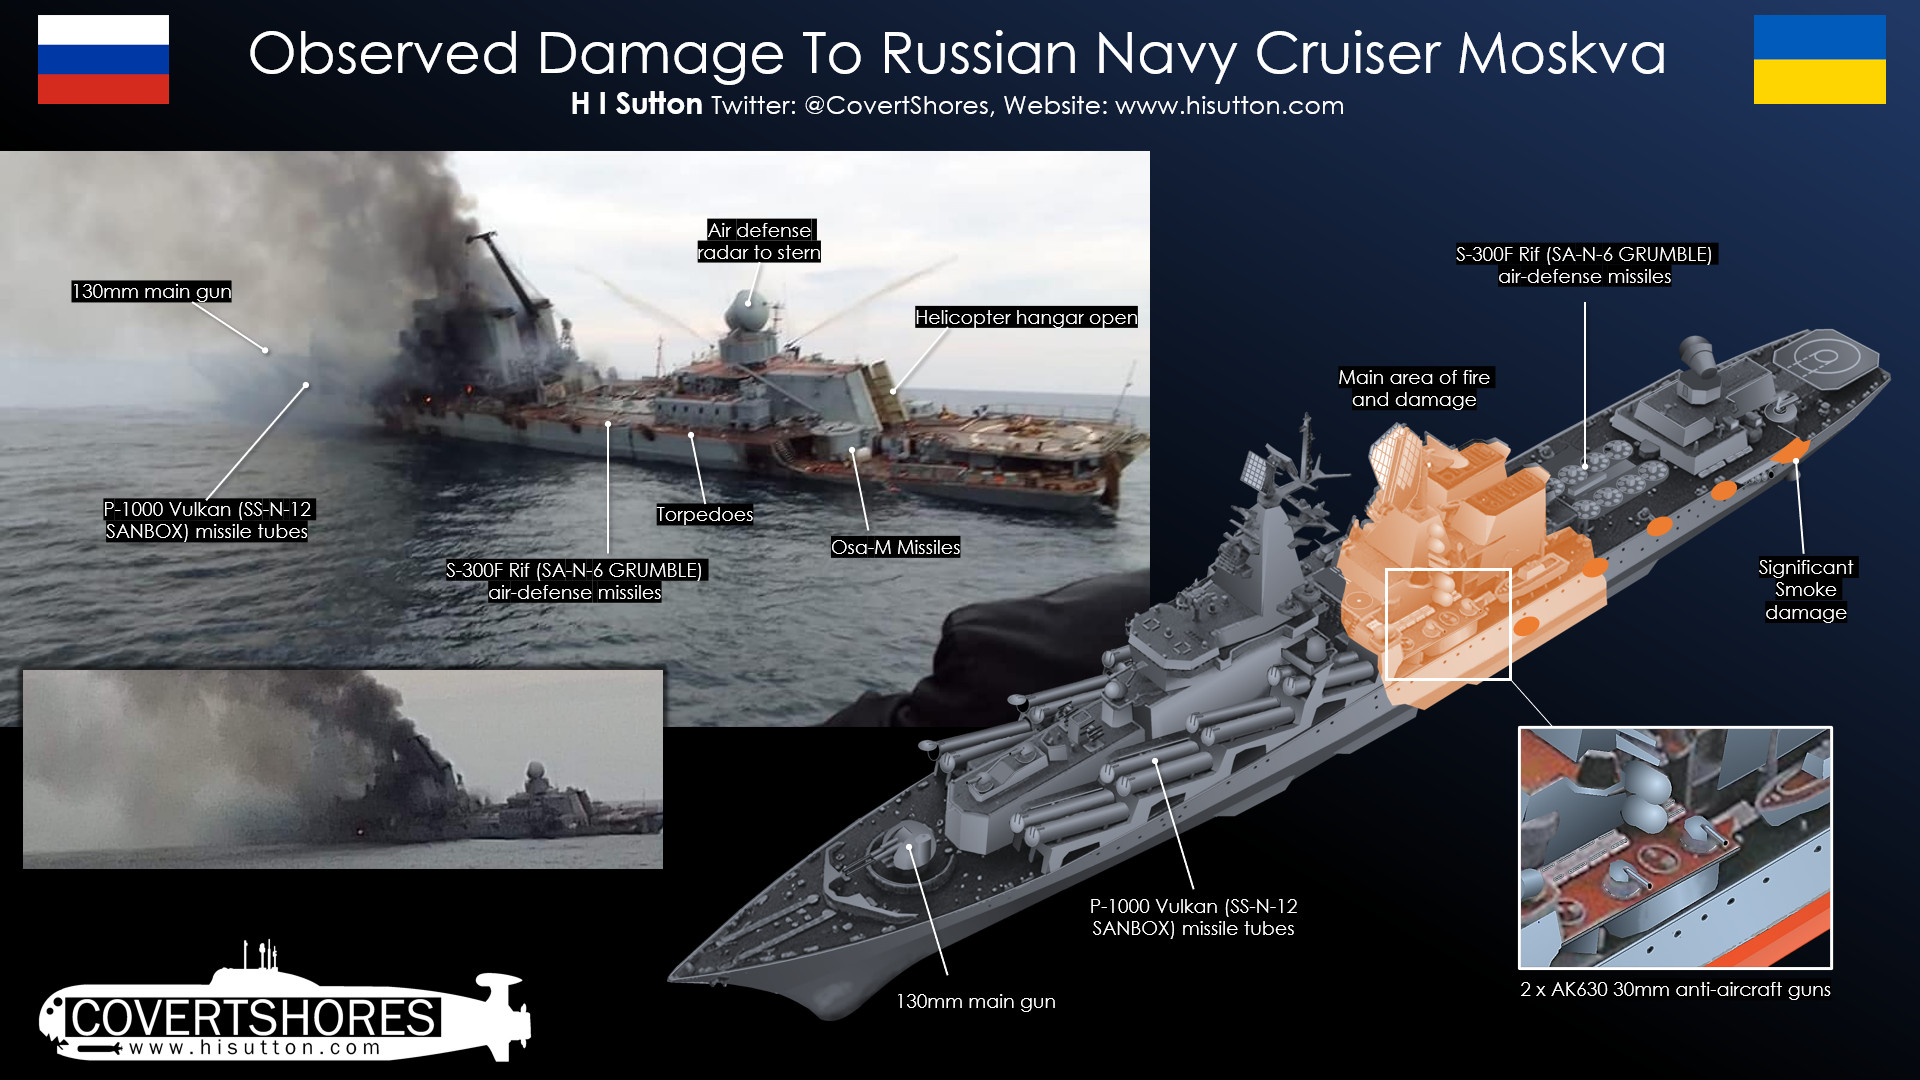 http://www.hisutton.com/images/Russia-Navy-Moskva-Damage.jpg